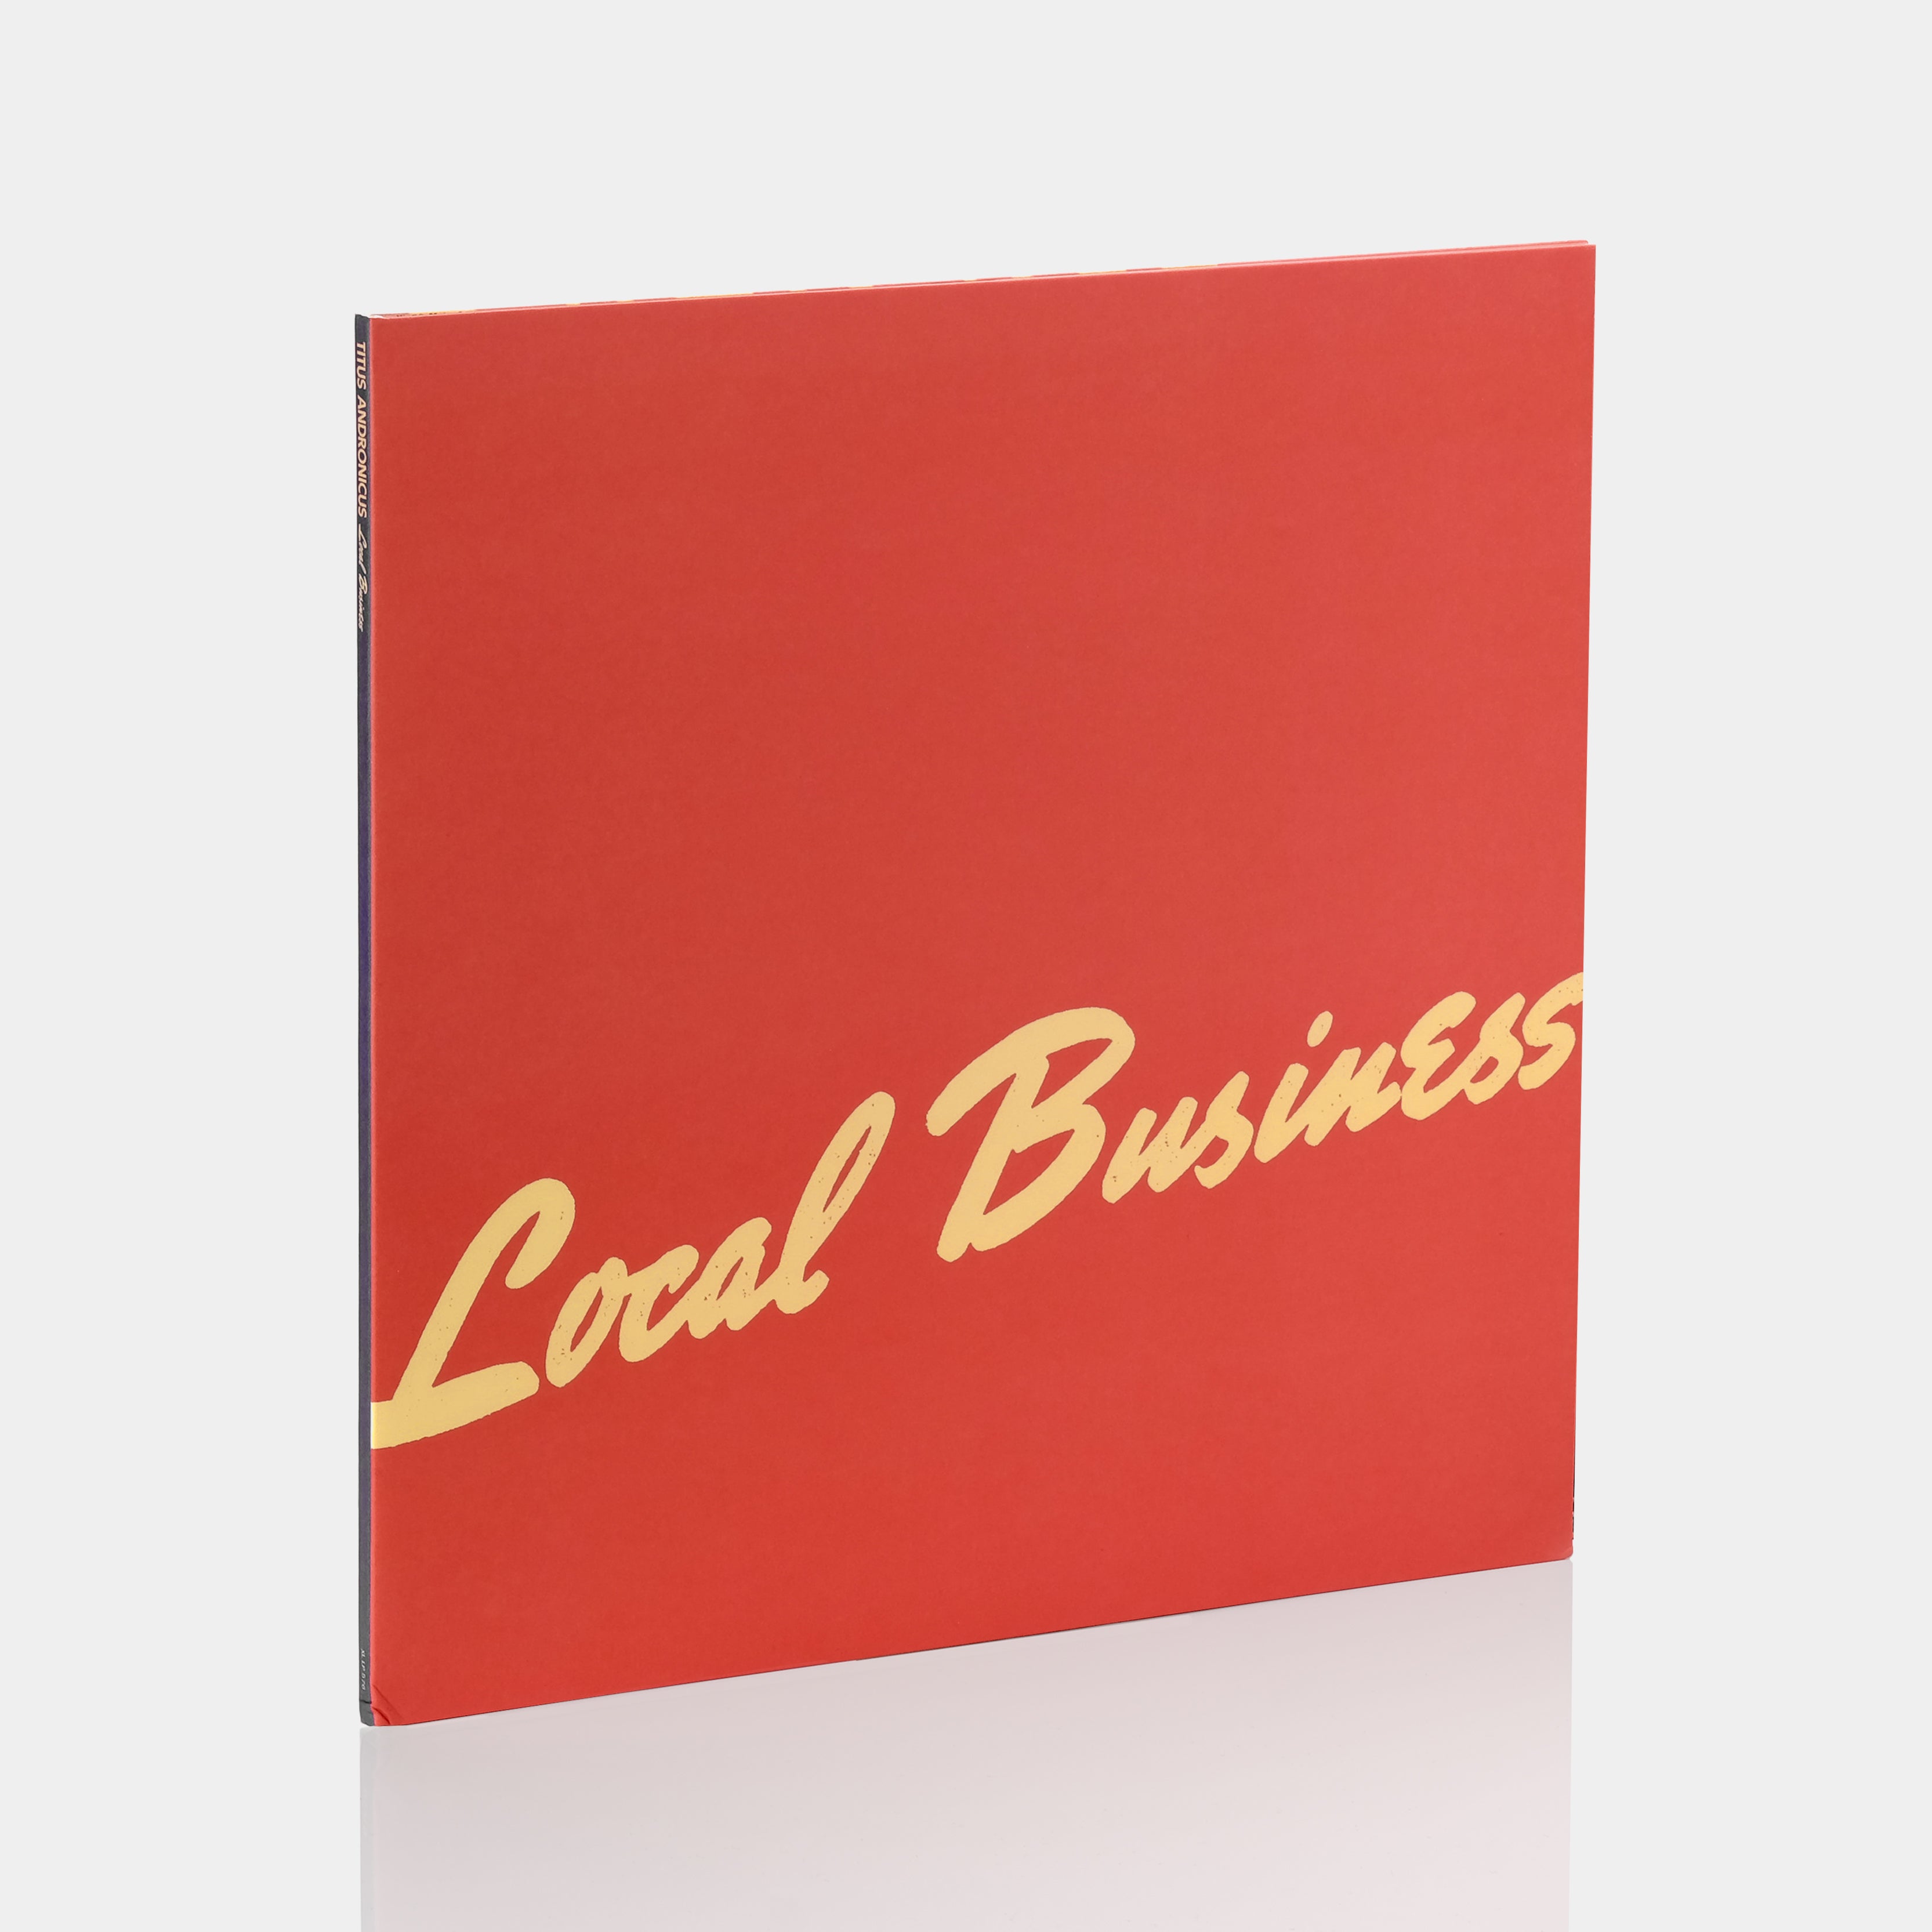 Titus Andronicus - Local Business LP Vinyl Record